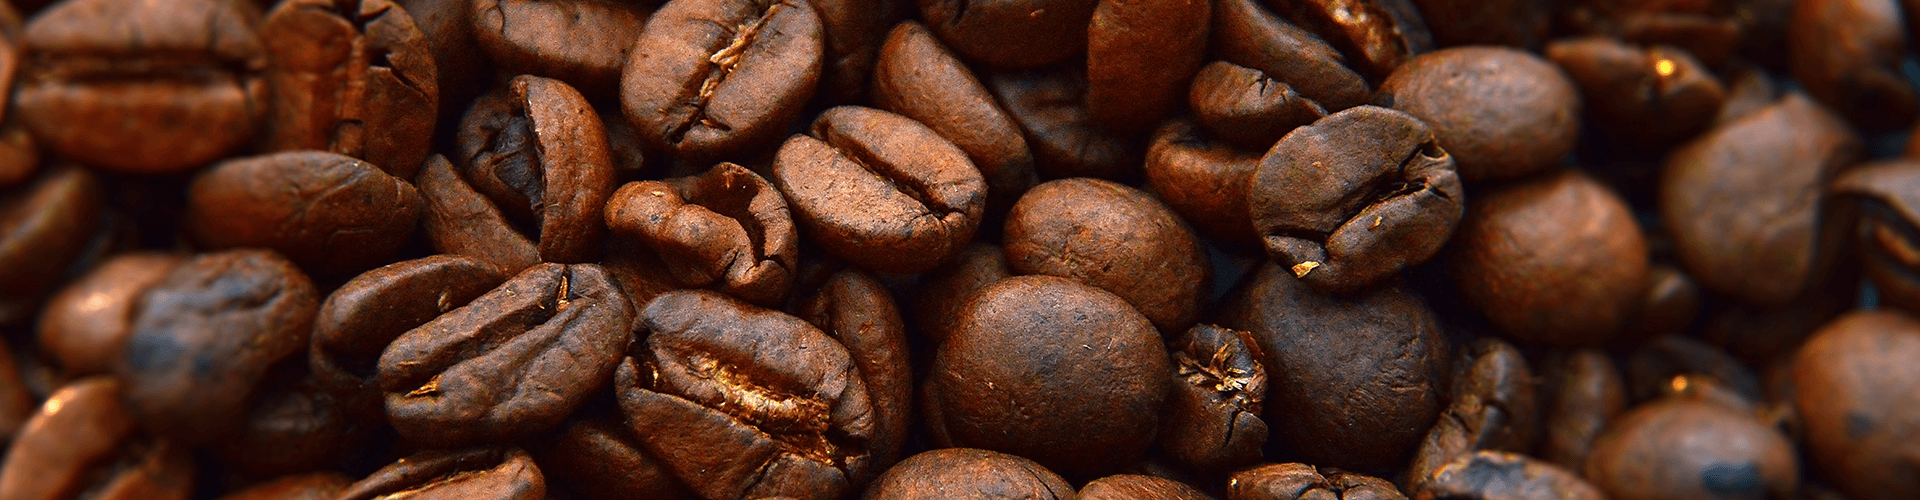 verachten boog Besmettelijk Koffiemachine bonen kopen? | MediaMarkt